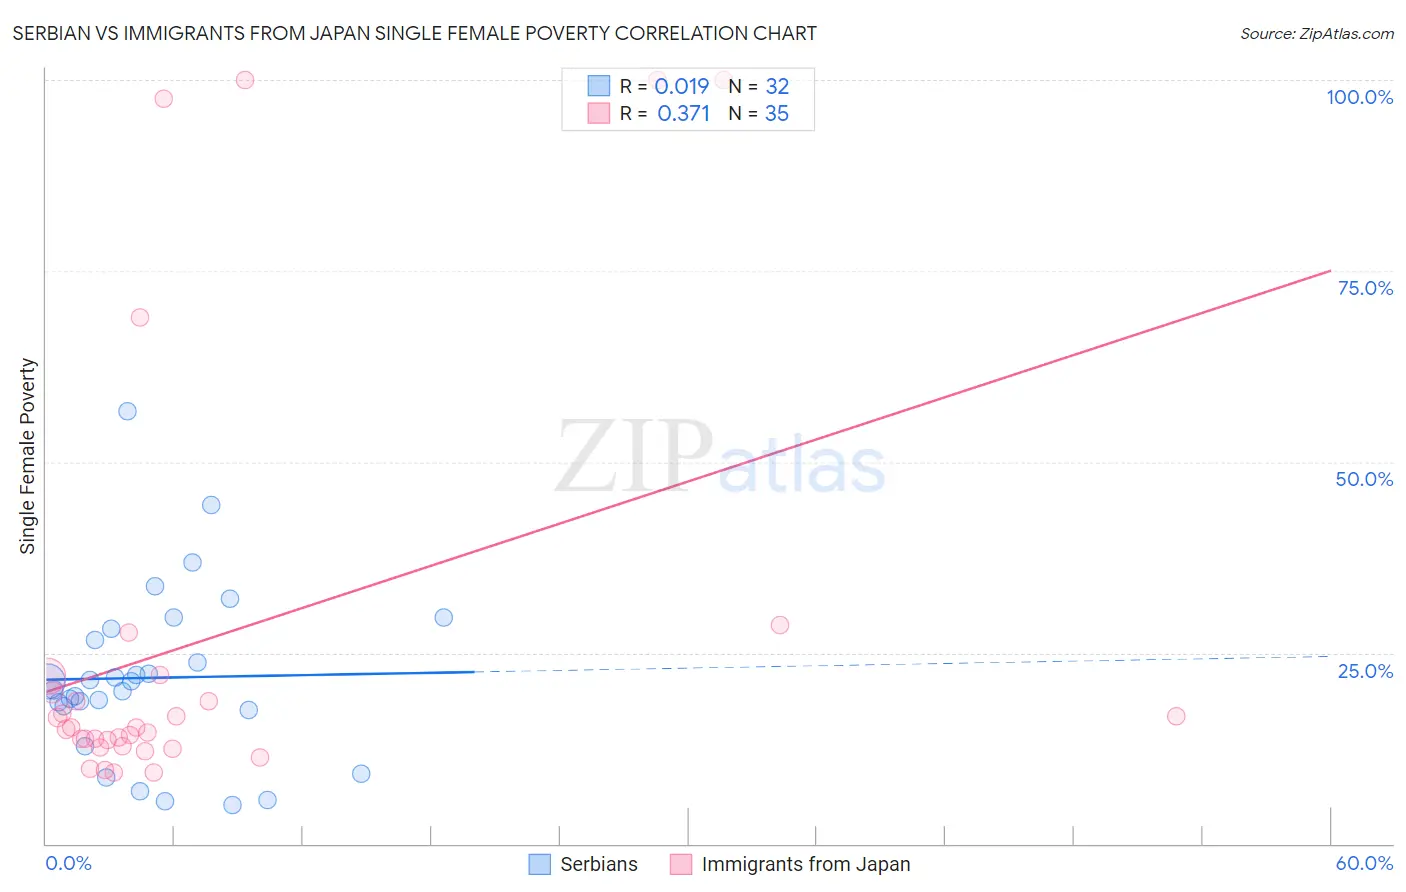 Serbian vs Immigrants from Japan Single Female Poverty